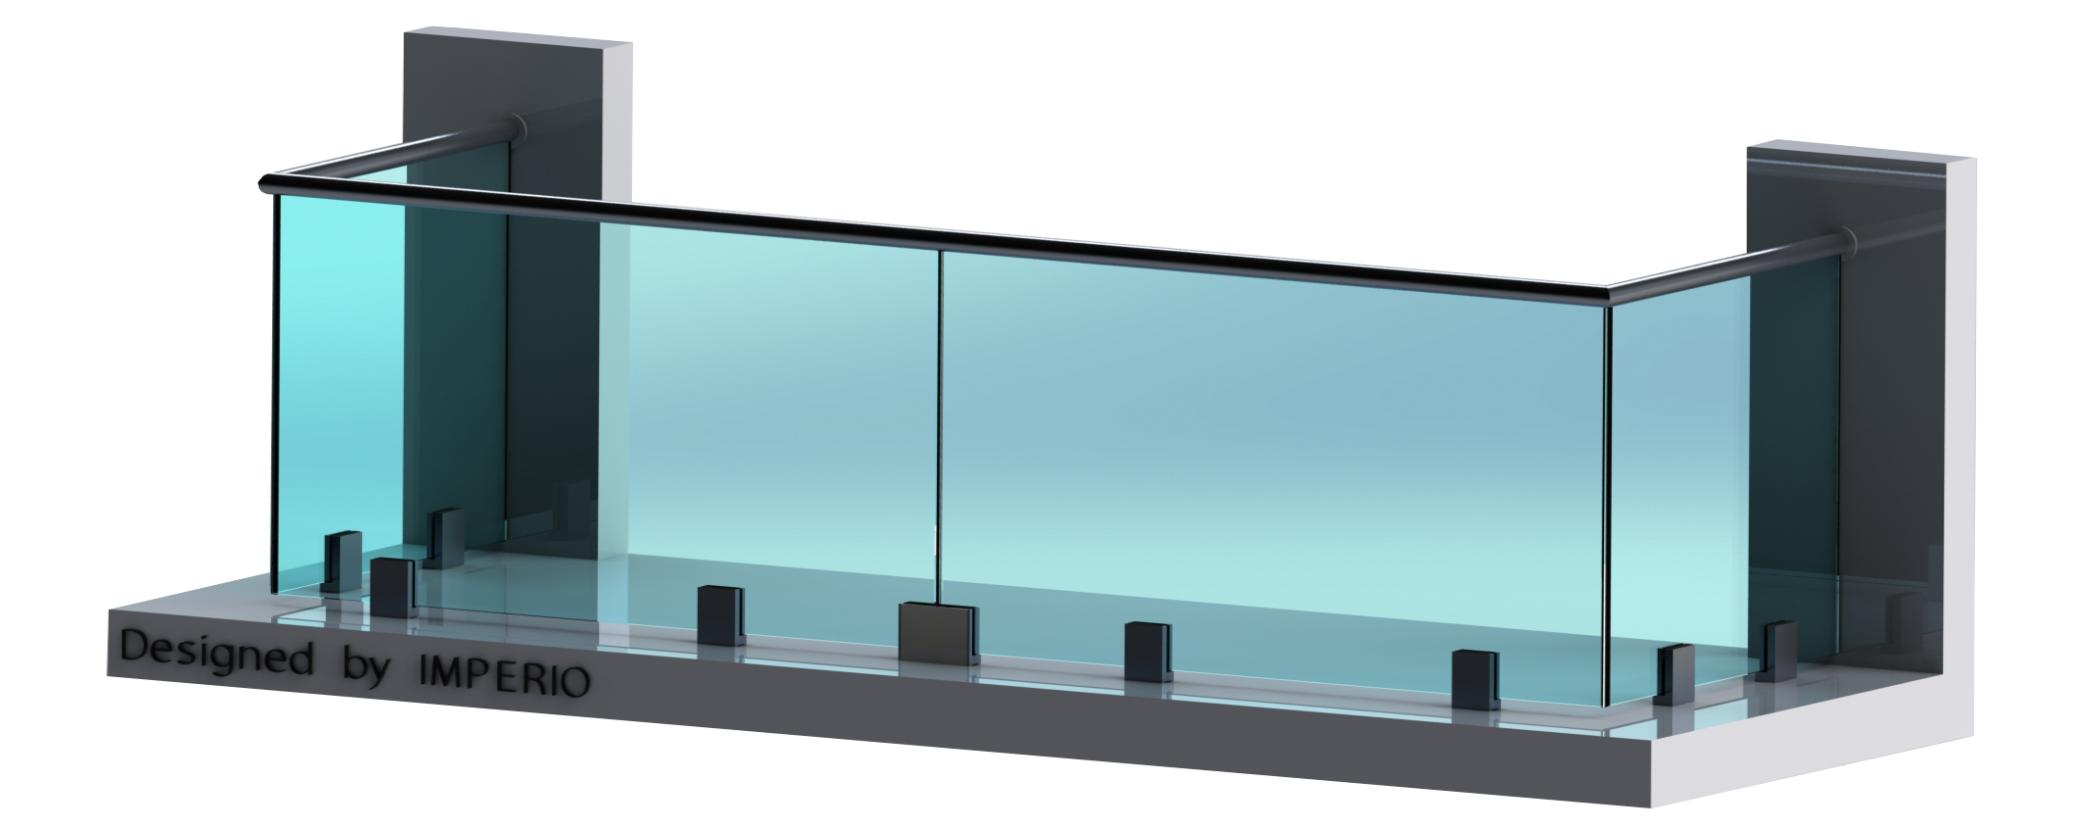 Imperio C50 Series Frameless glass railing